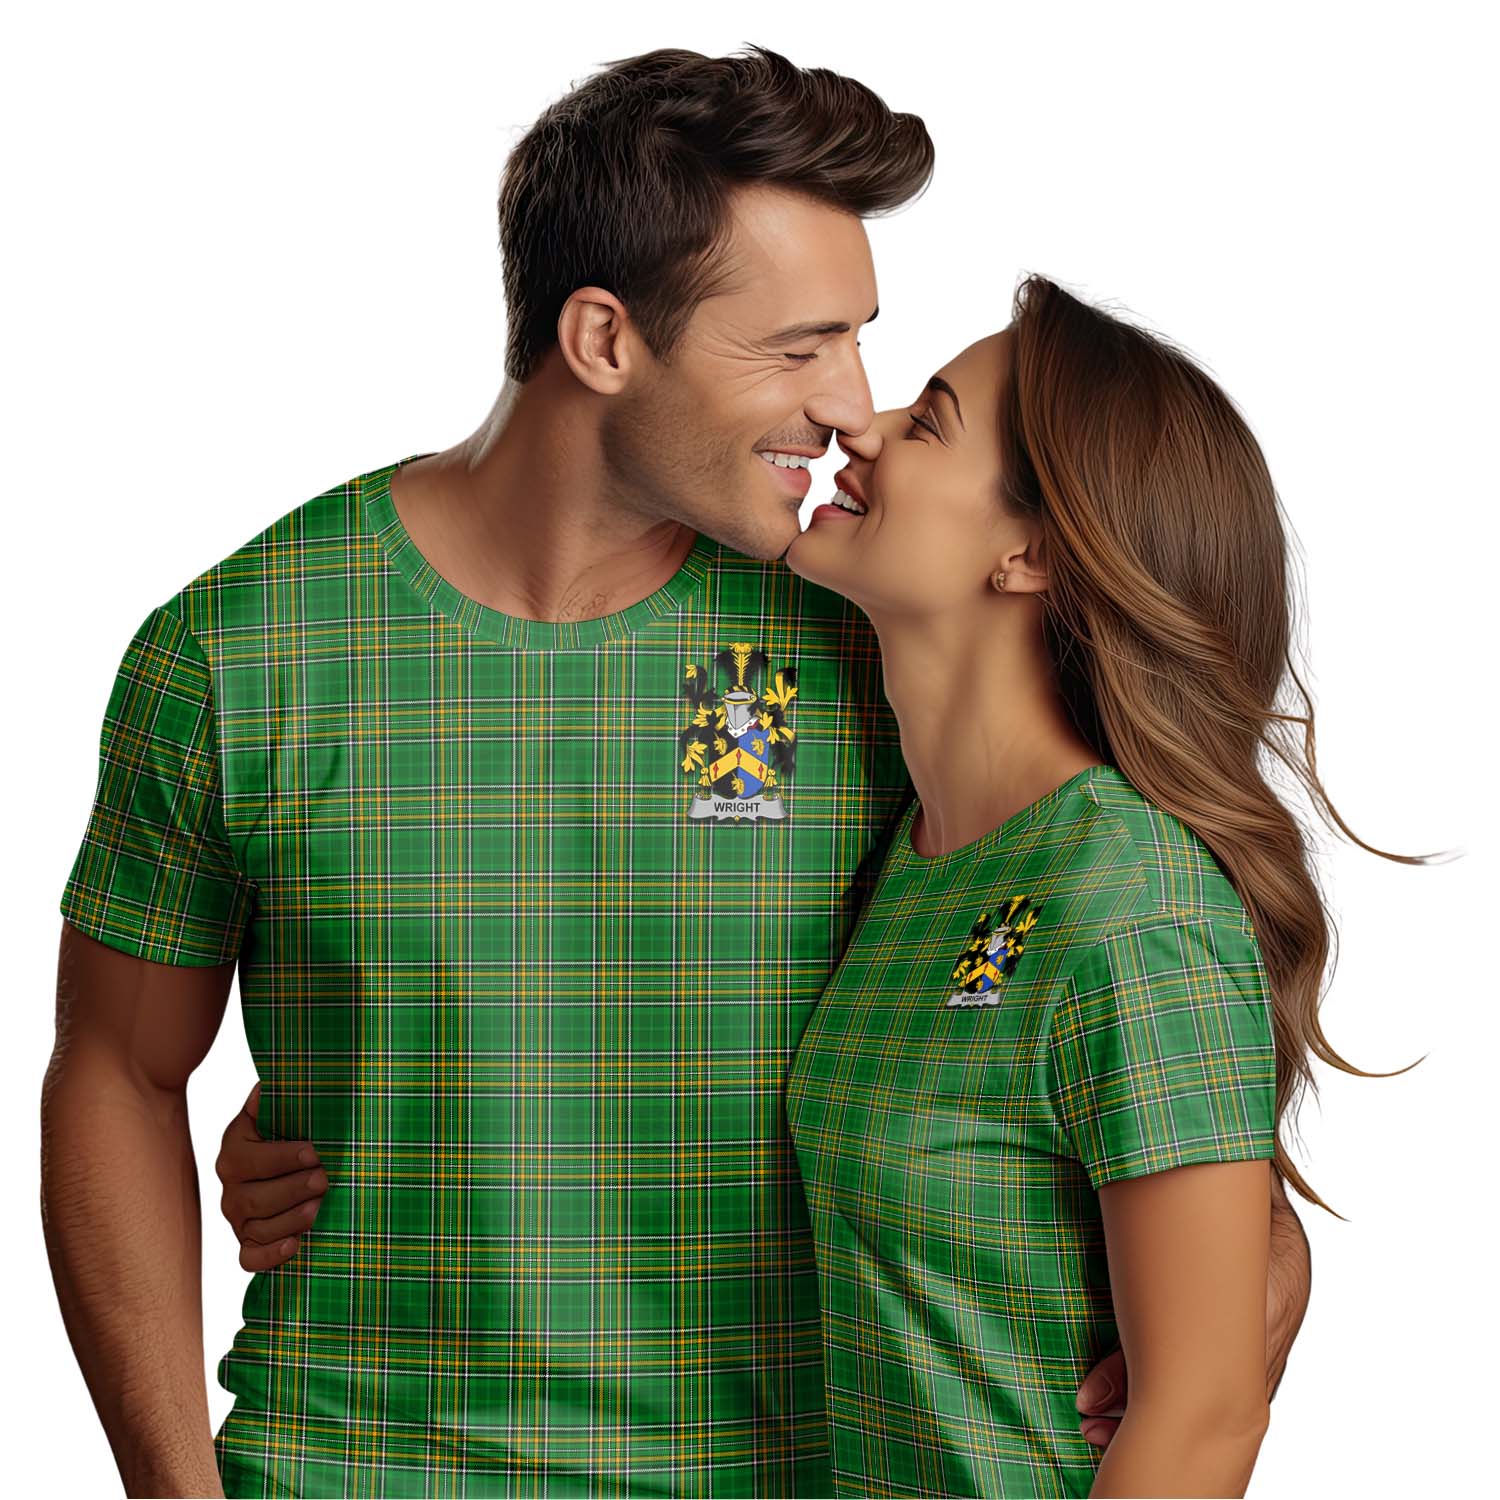 Tartan Vibes Clothing Wright Ireland Clan Tartan T-Shirt with Family Seal